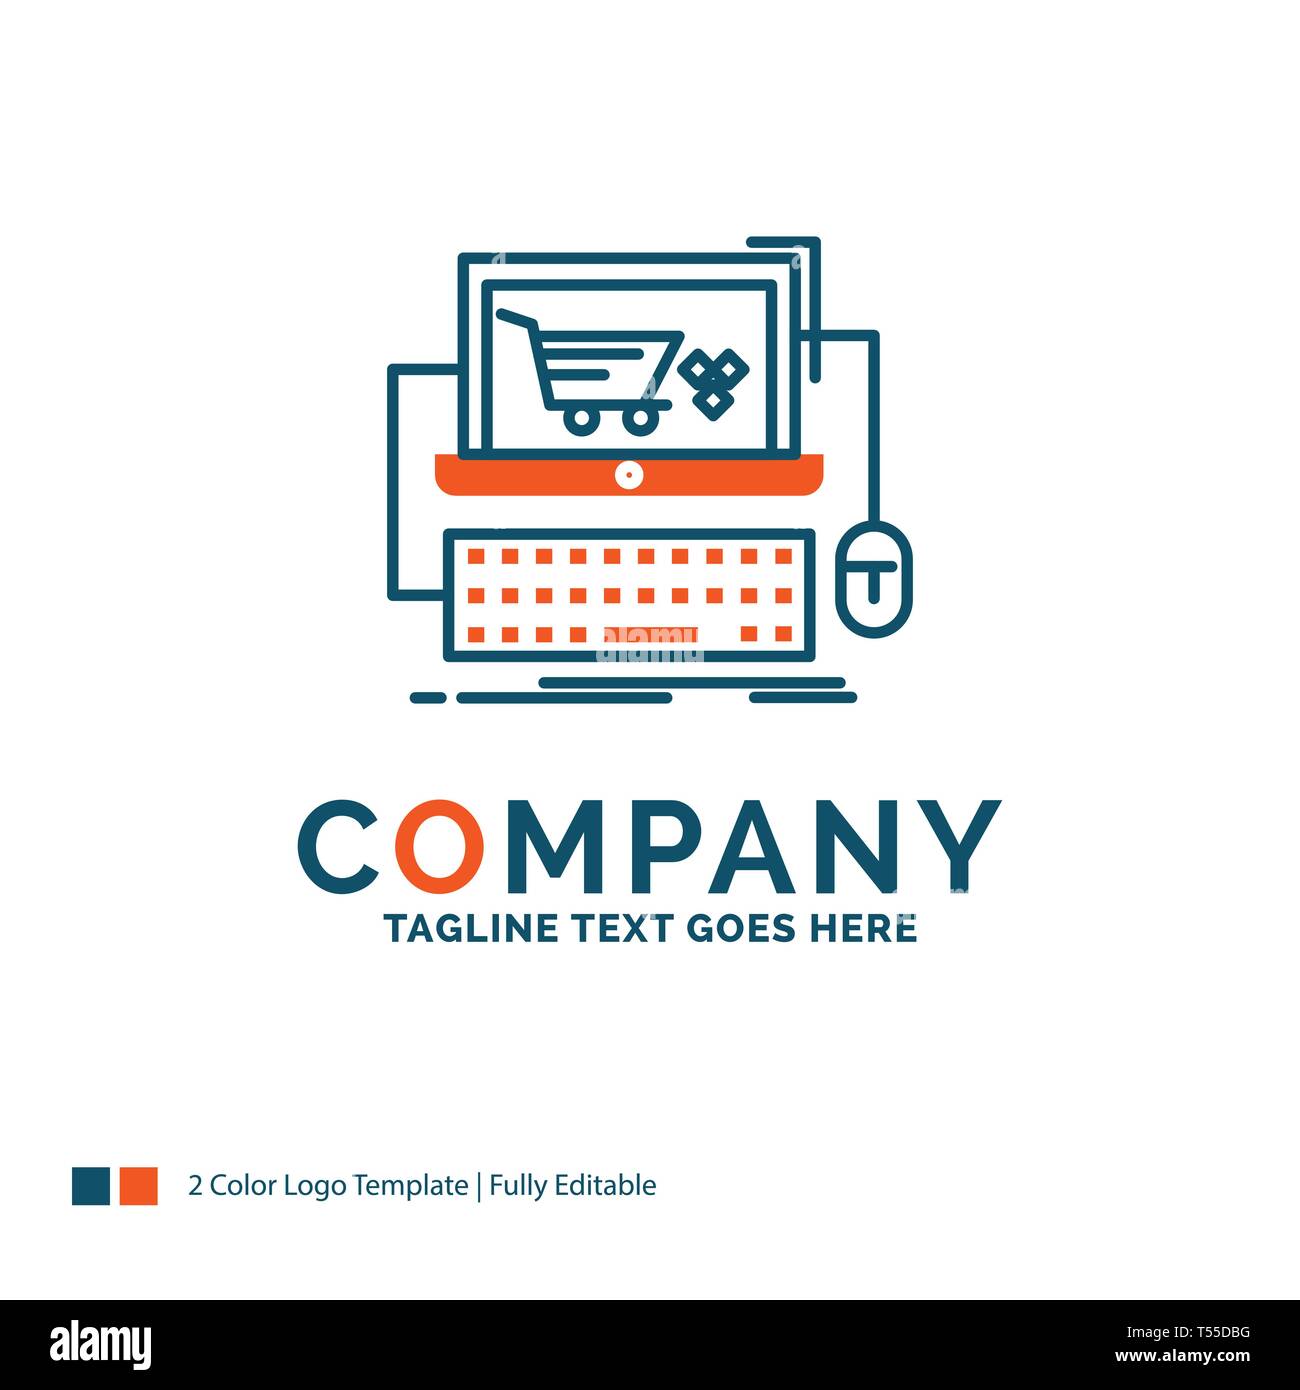 Cart Online Shop Store Game Logo Design Blue And Orange Brand Name Design Place For Tagline Business Logo Template Stock Vector Image Art Alamy